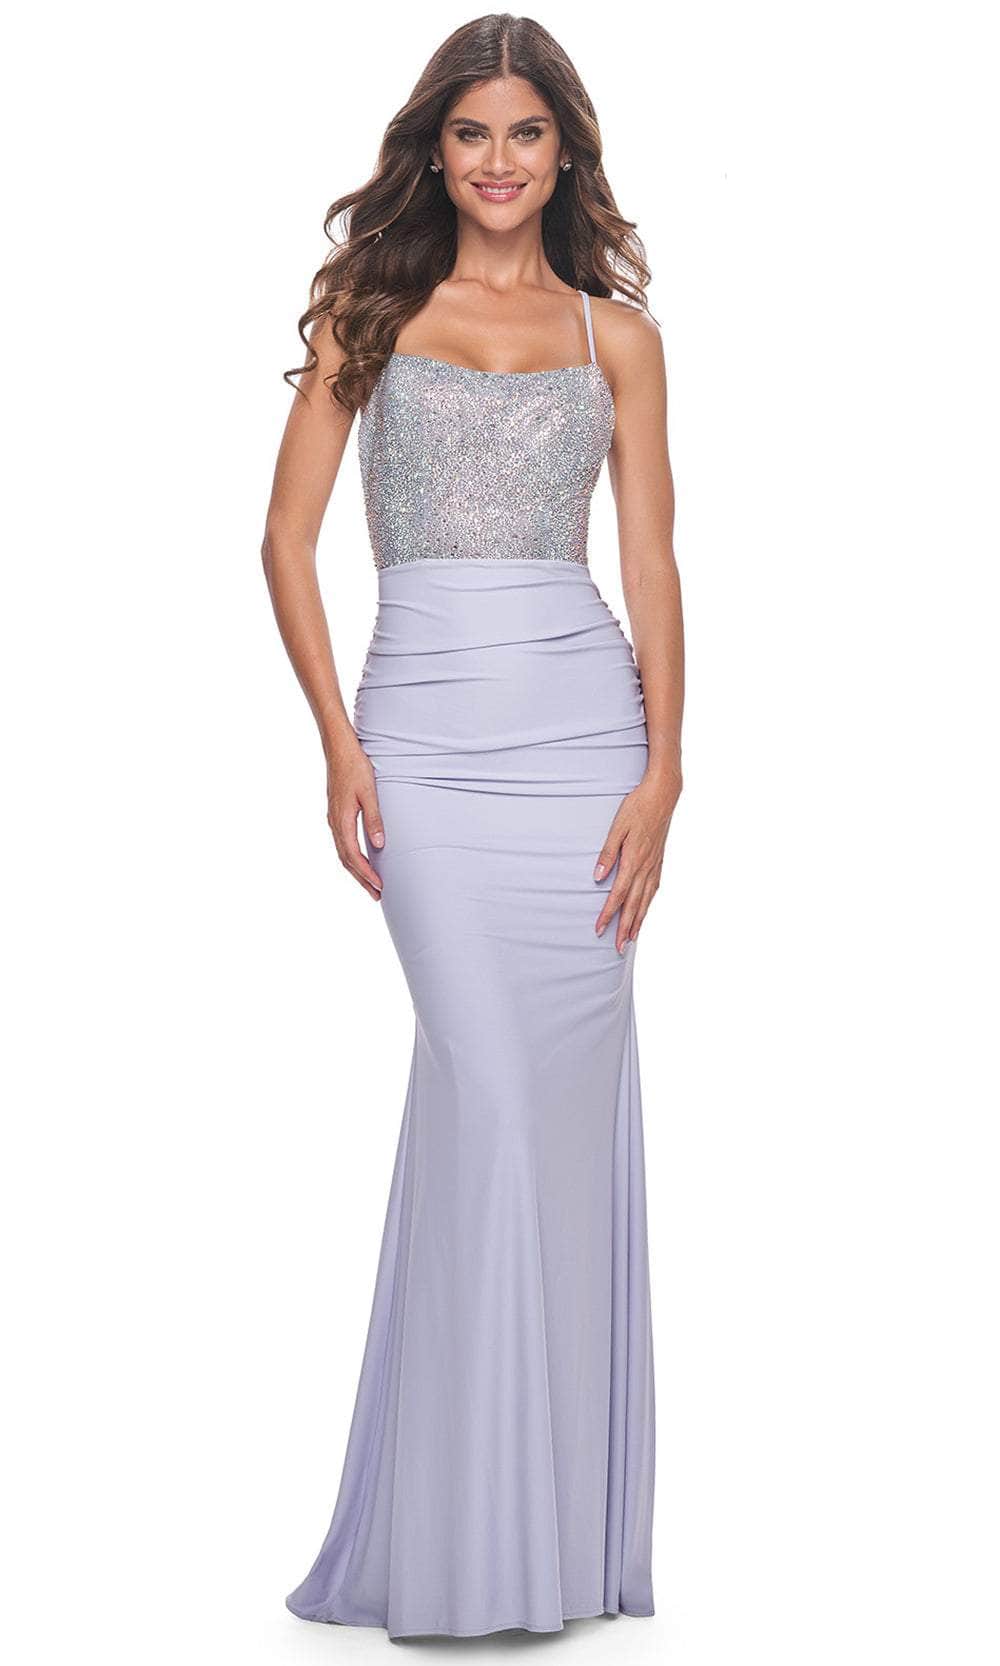 La Femme 31989 - Beaded Bodice Prom Dress Special Occasion Dress 00 / Light Periwinkle